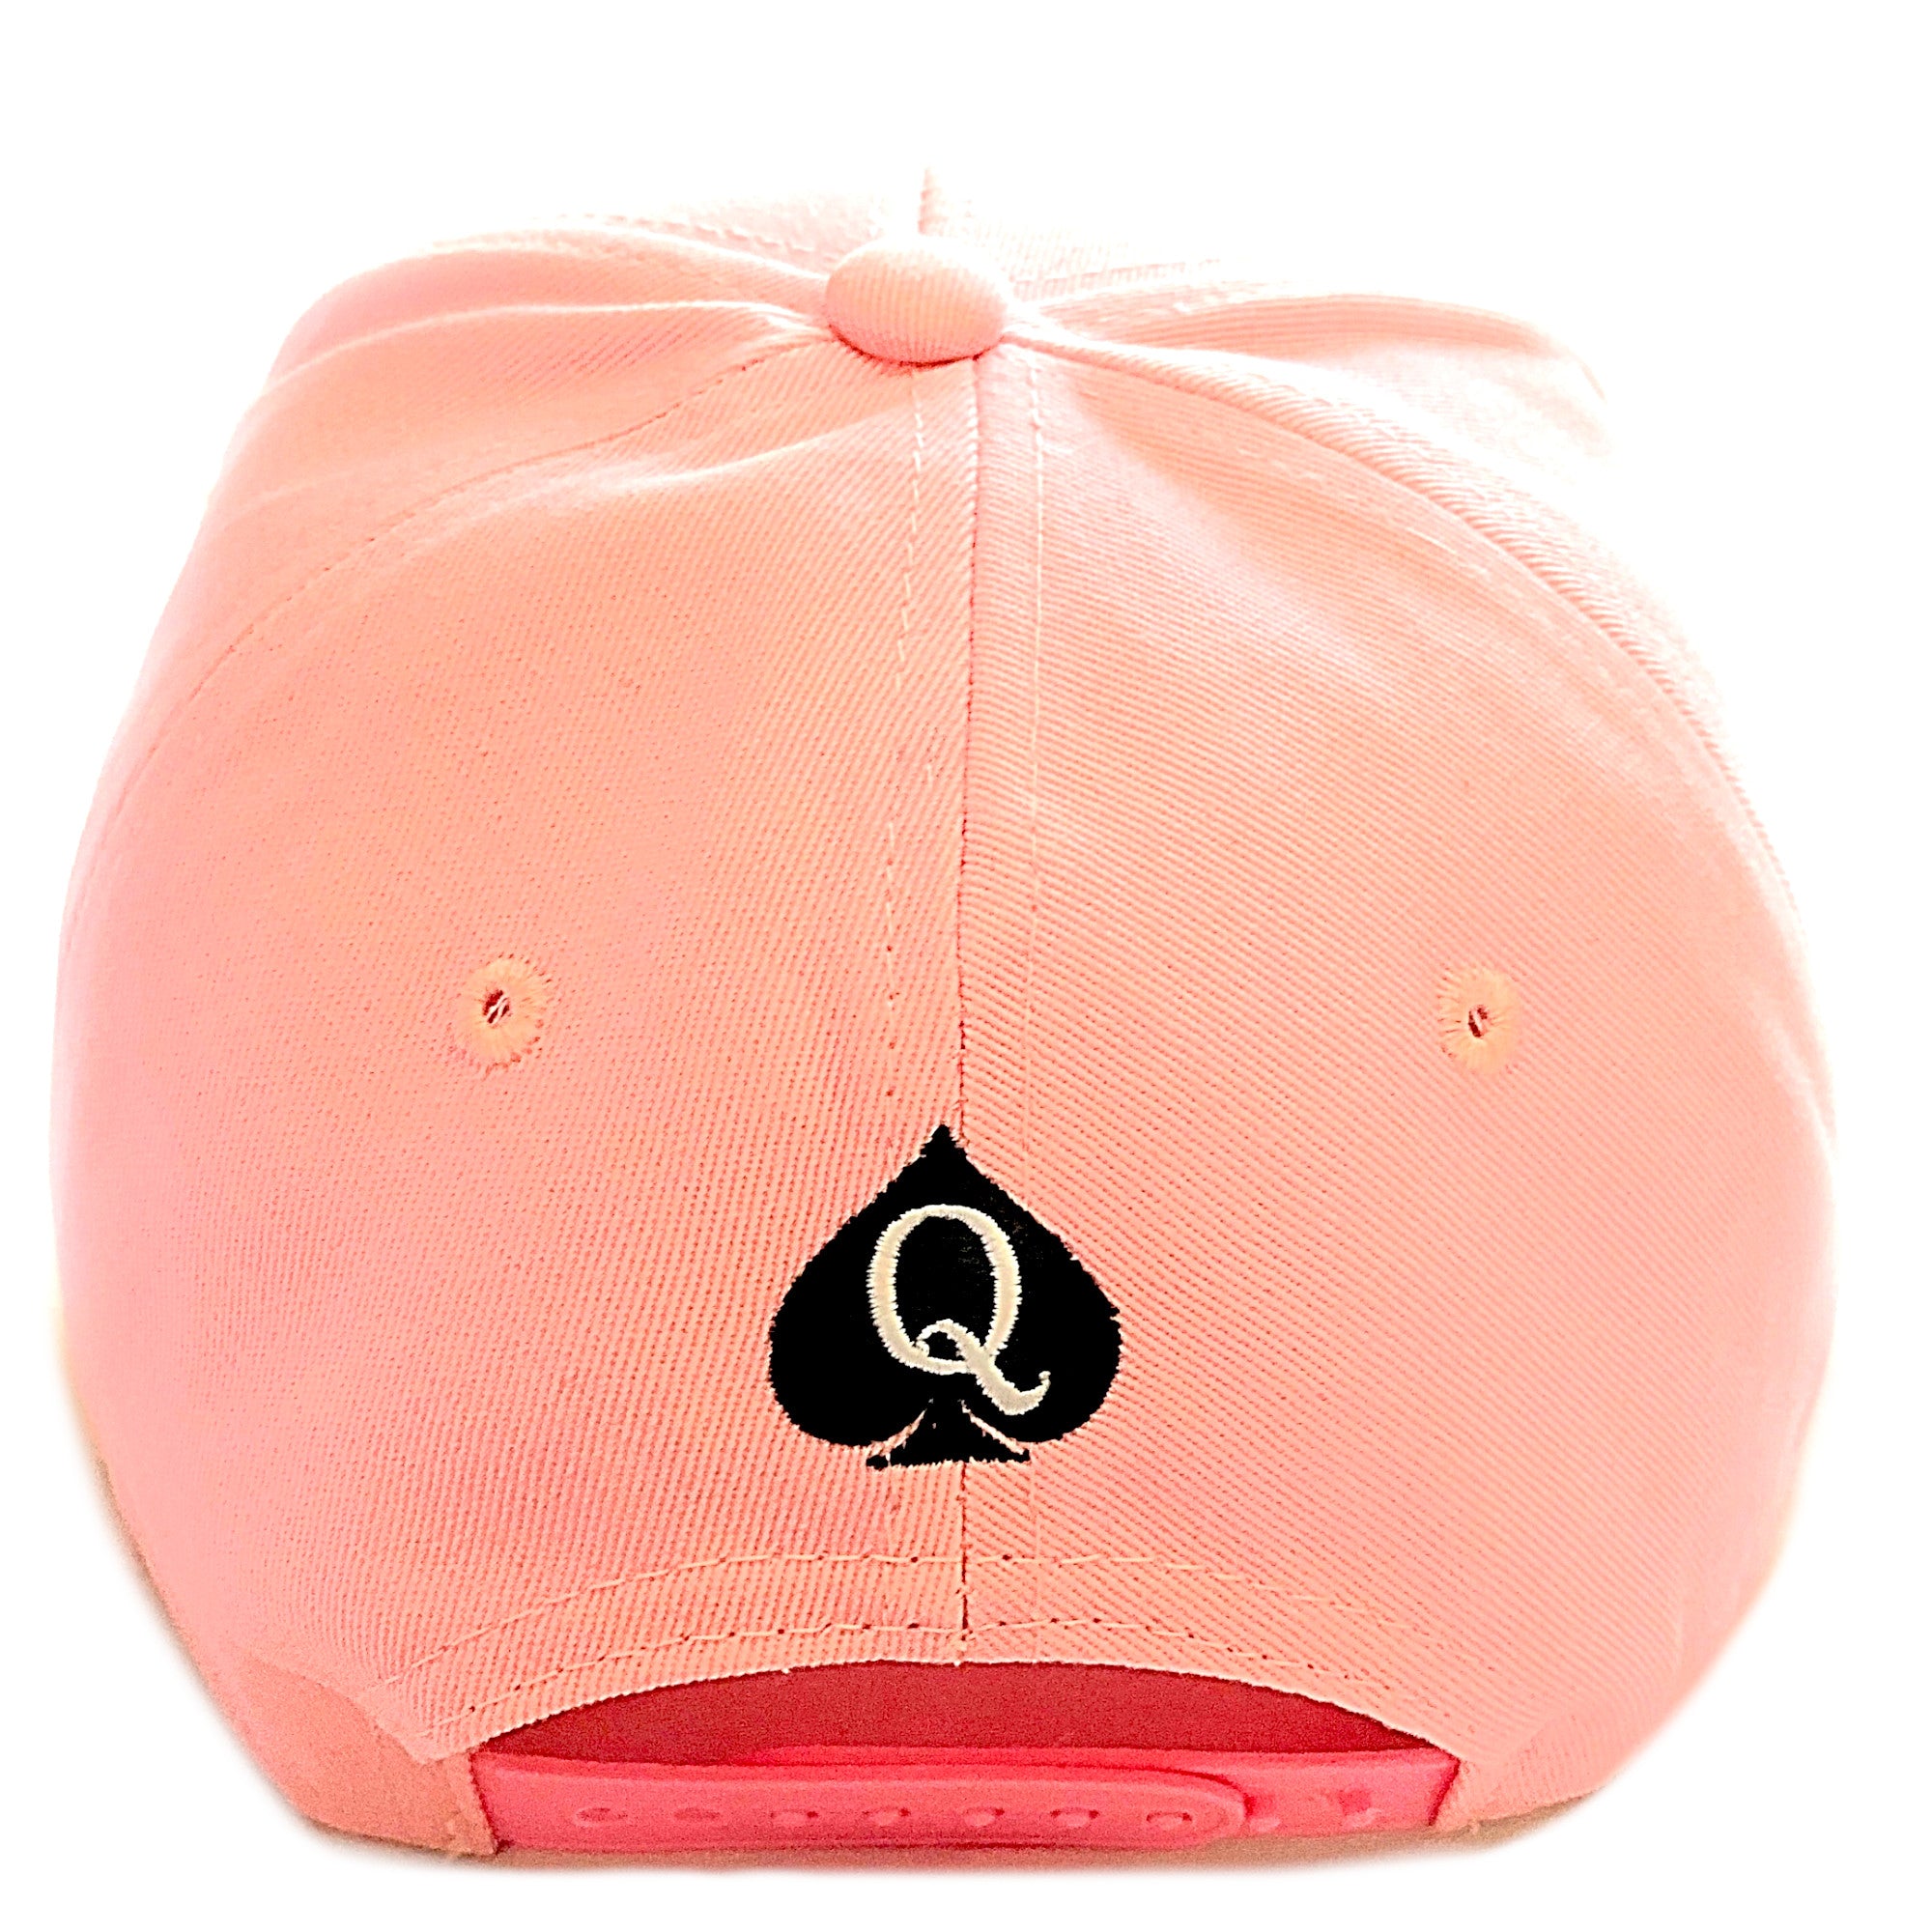 PINK SISSY - Adjustable Baseball Cap Hat Pink/Black Blacked Hotwife